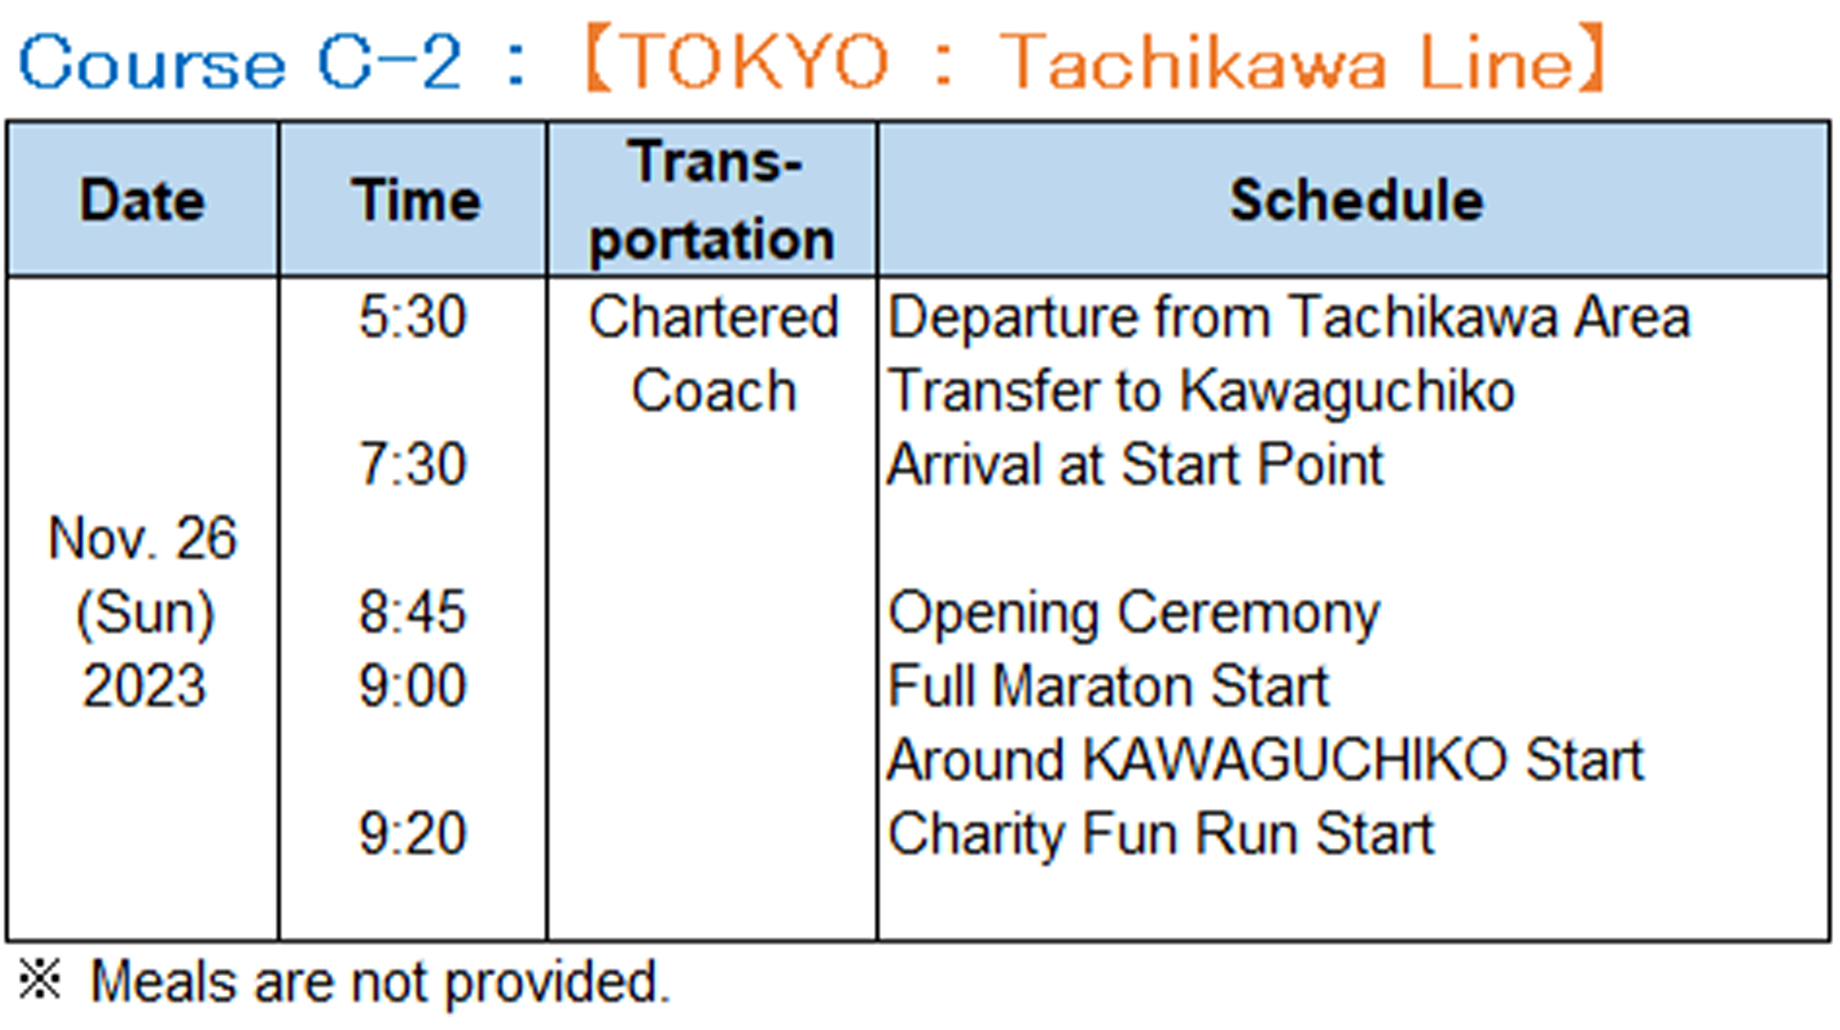 Course C-2:  [TOKYO - Tachikawa Line]